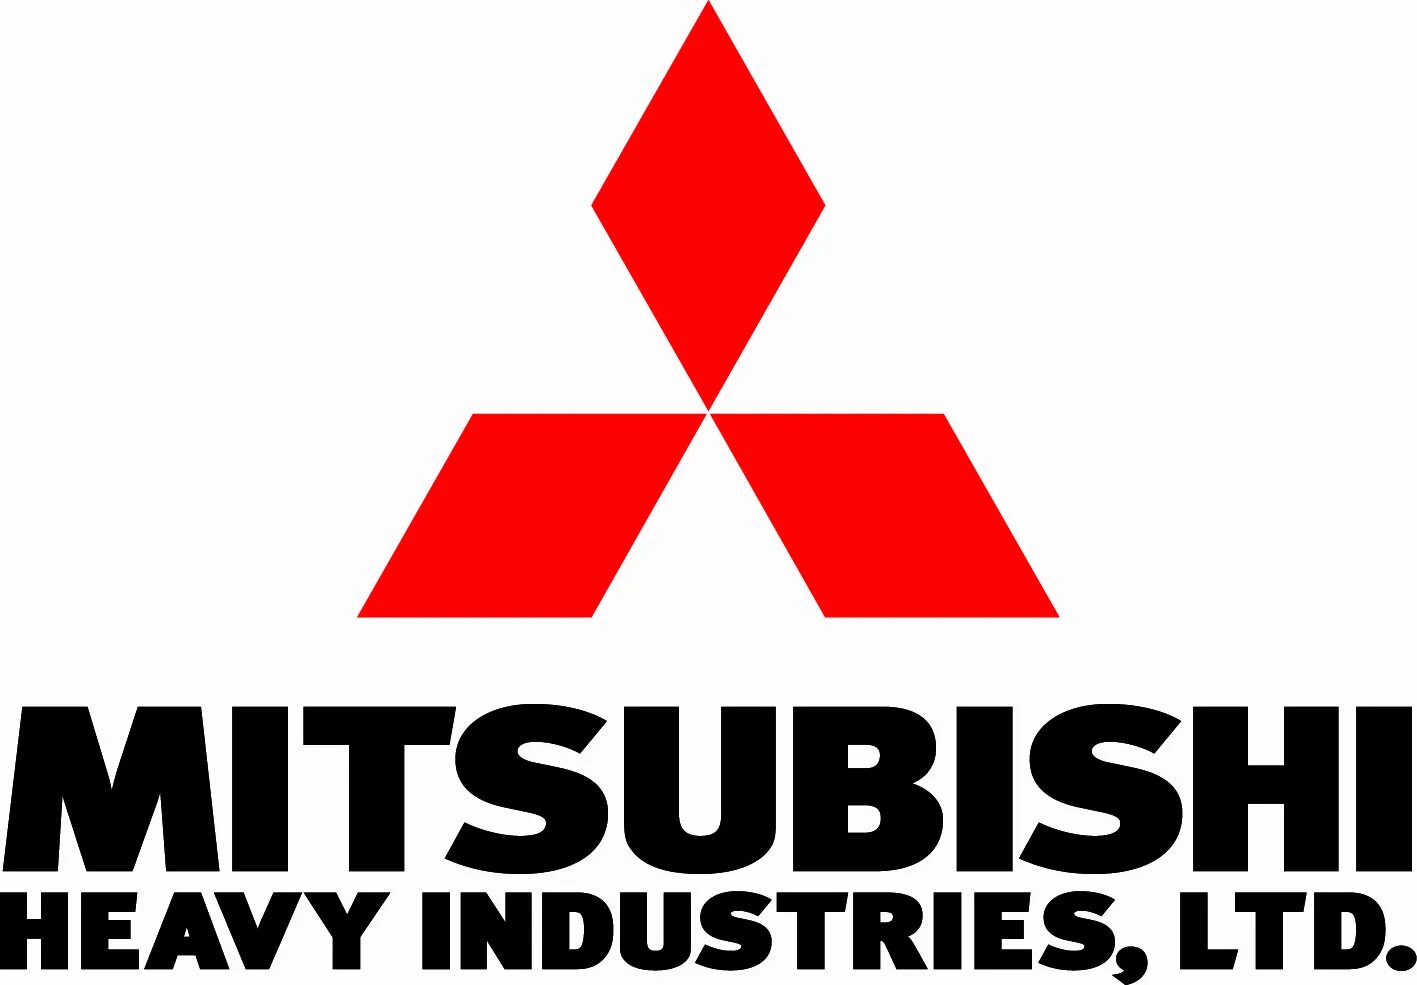 Митсубиси лого. Логотип Mitsubishi Motors. Mitsubishi Heavy industries Ltd. Mitsubishi надпись. Mitsubishi описание